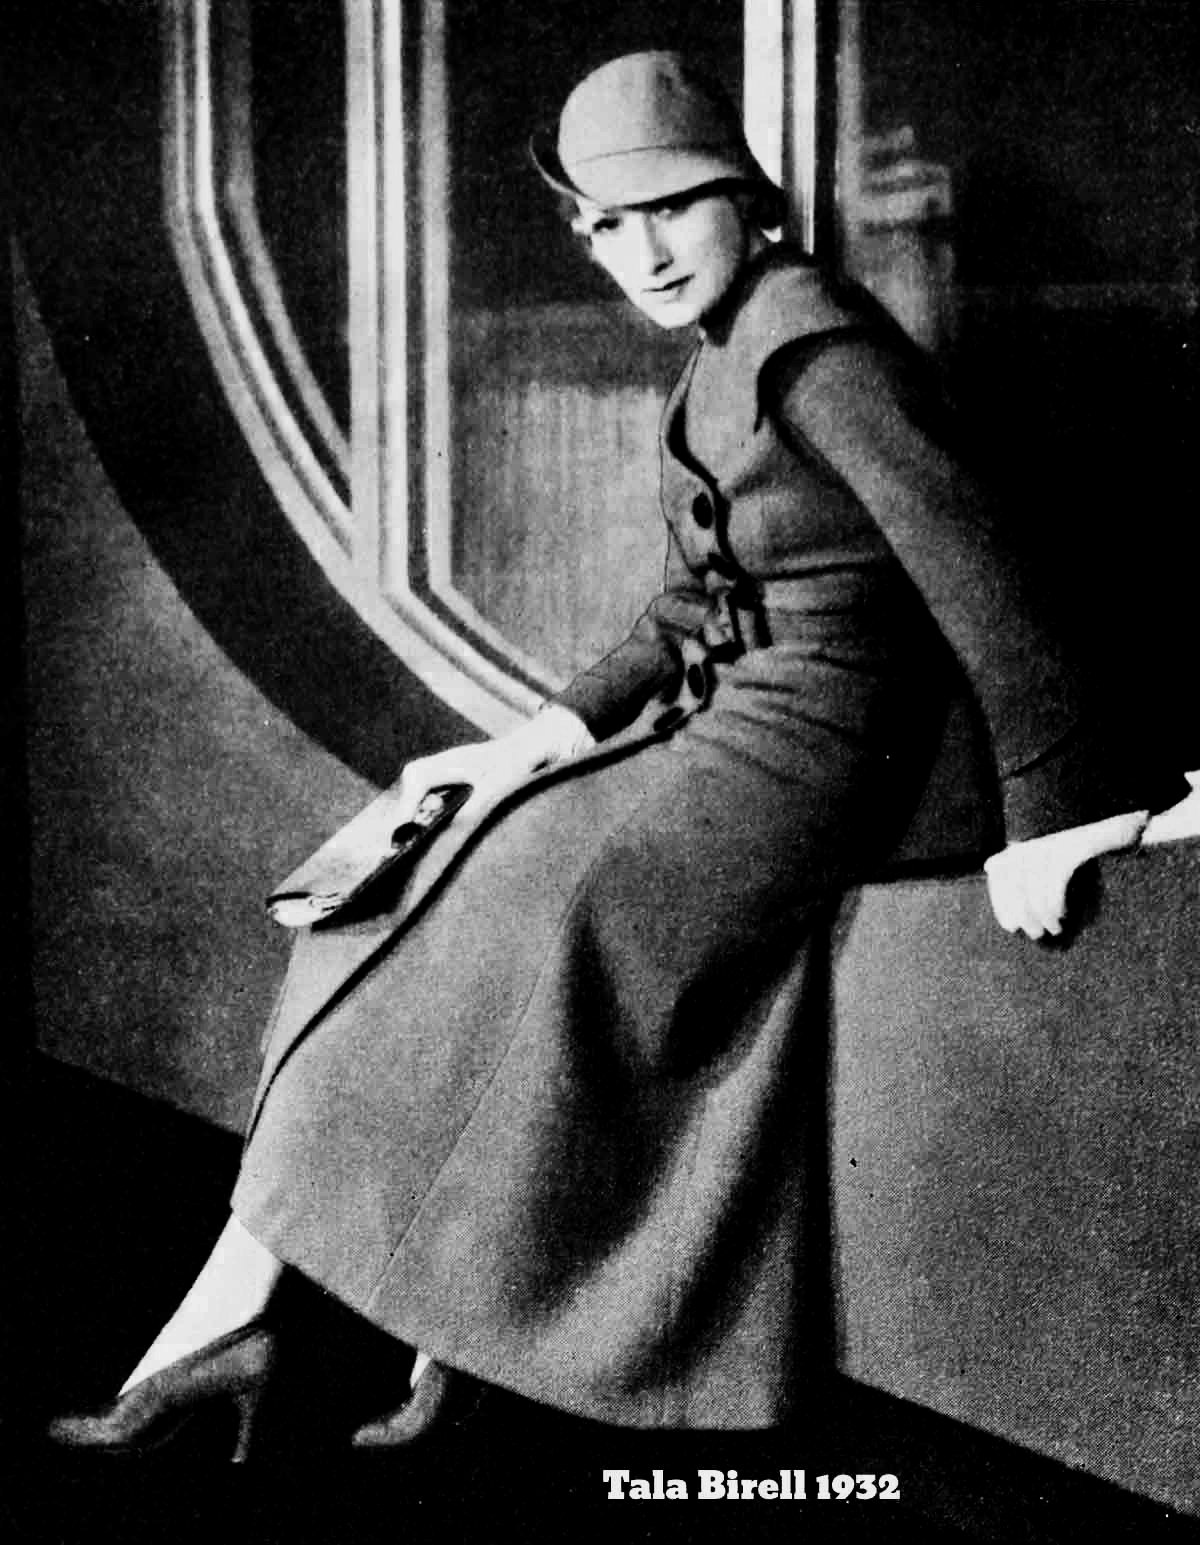 Tala Birell in 1932 modeling winter fashions